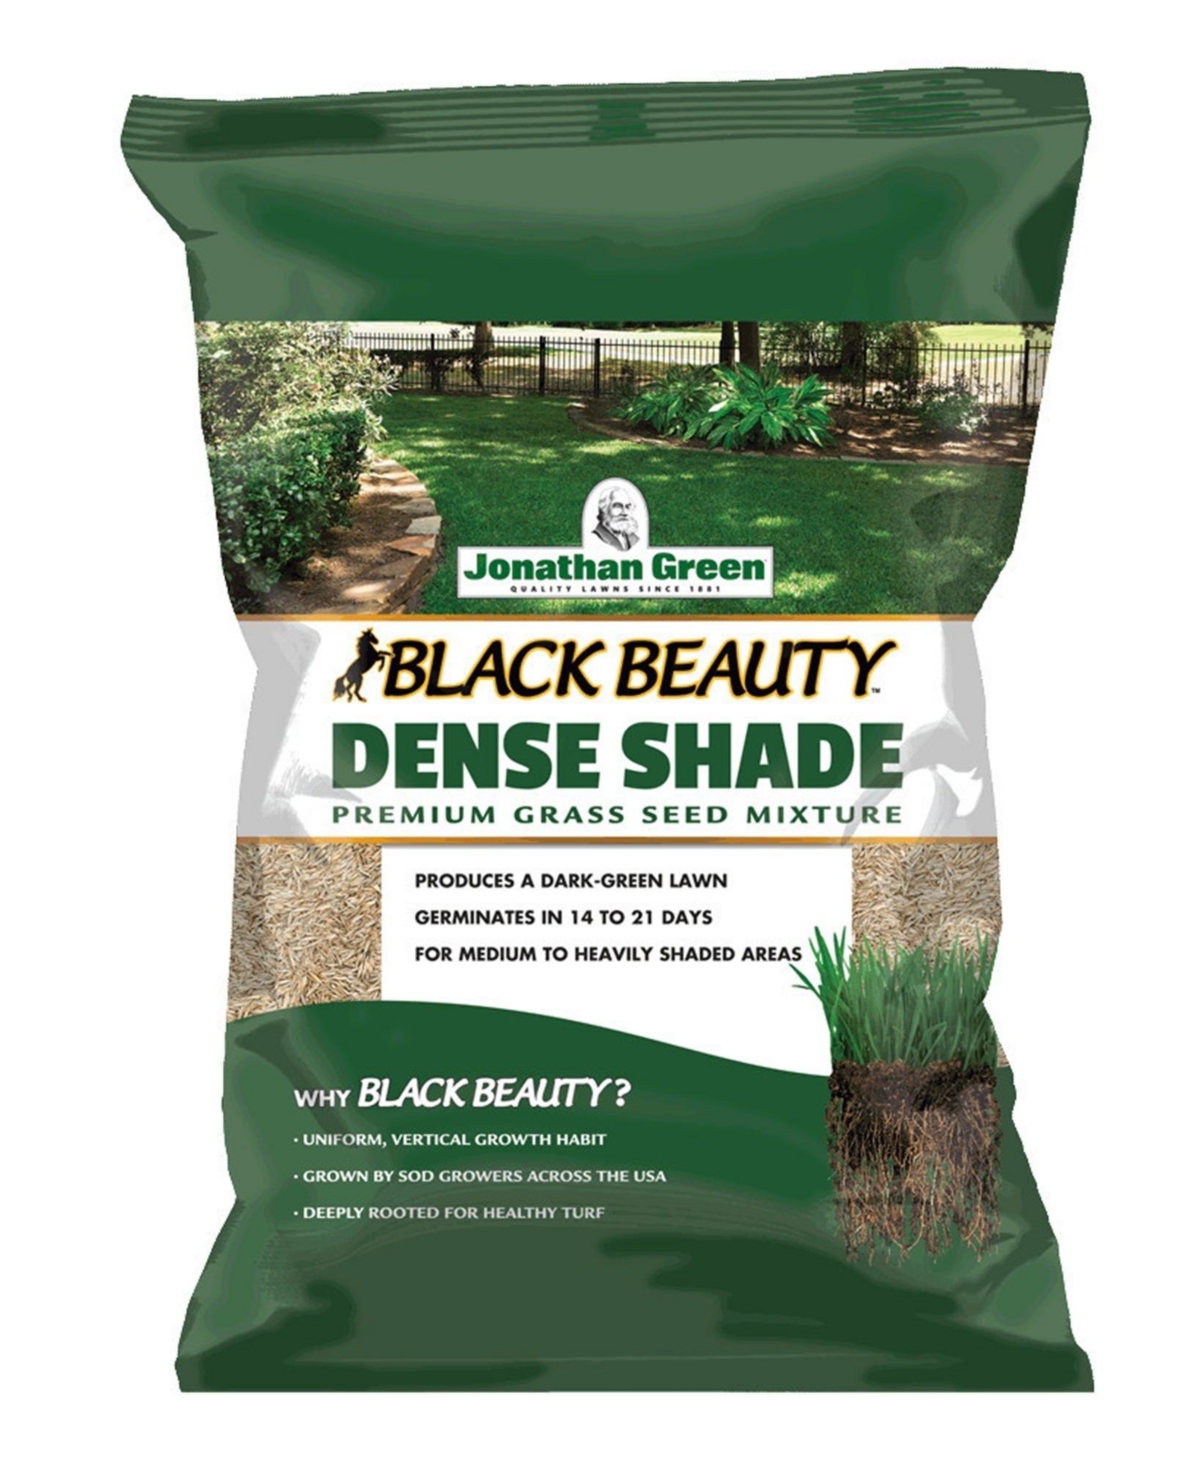 Black Beauty Dense Shade Grass Seed Mix, 3lb bag - Brown